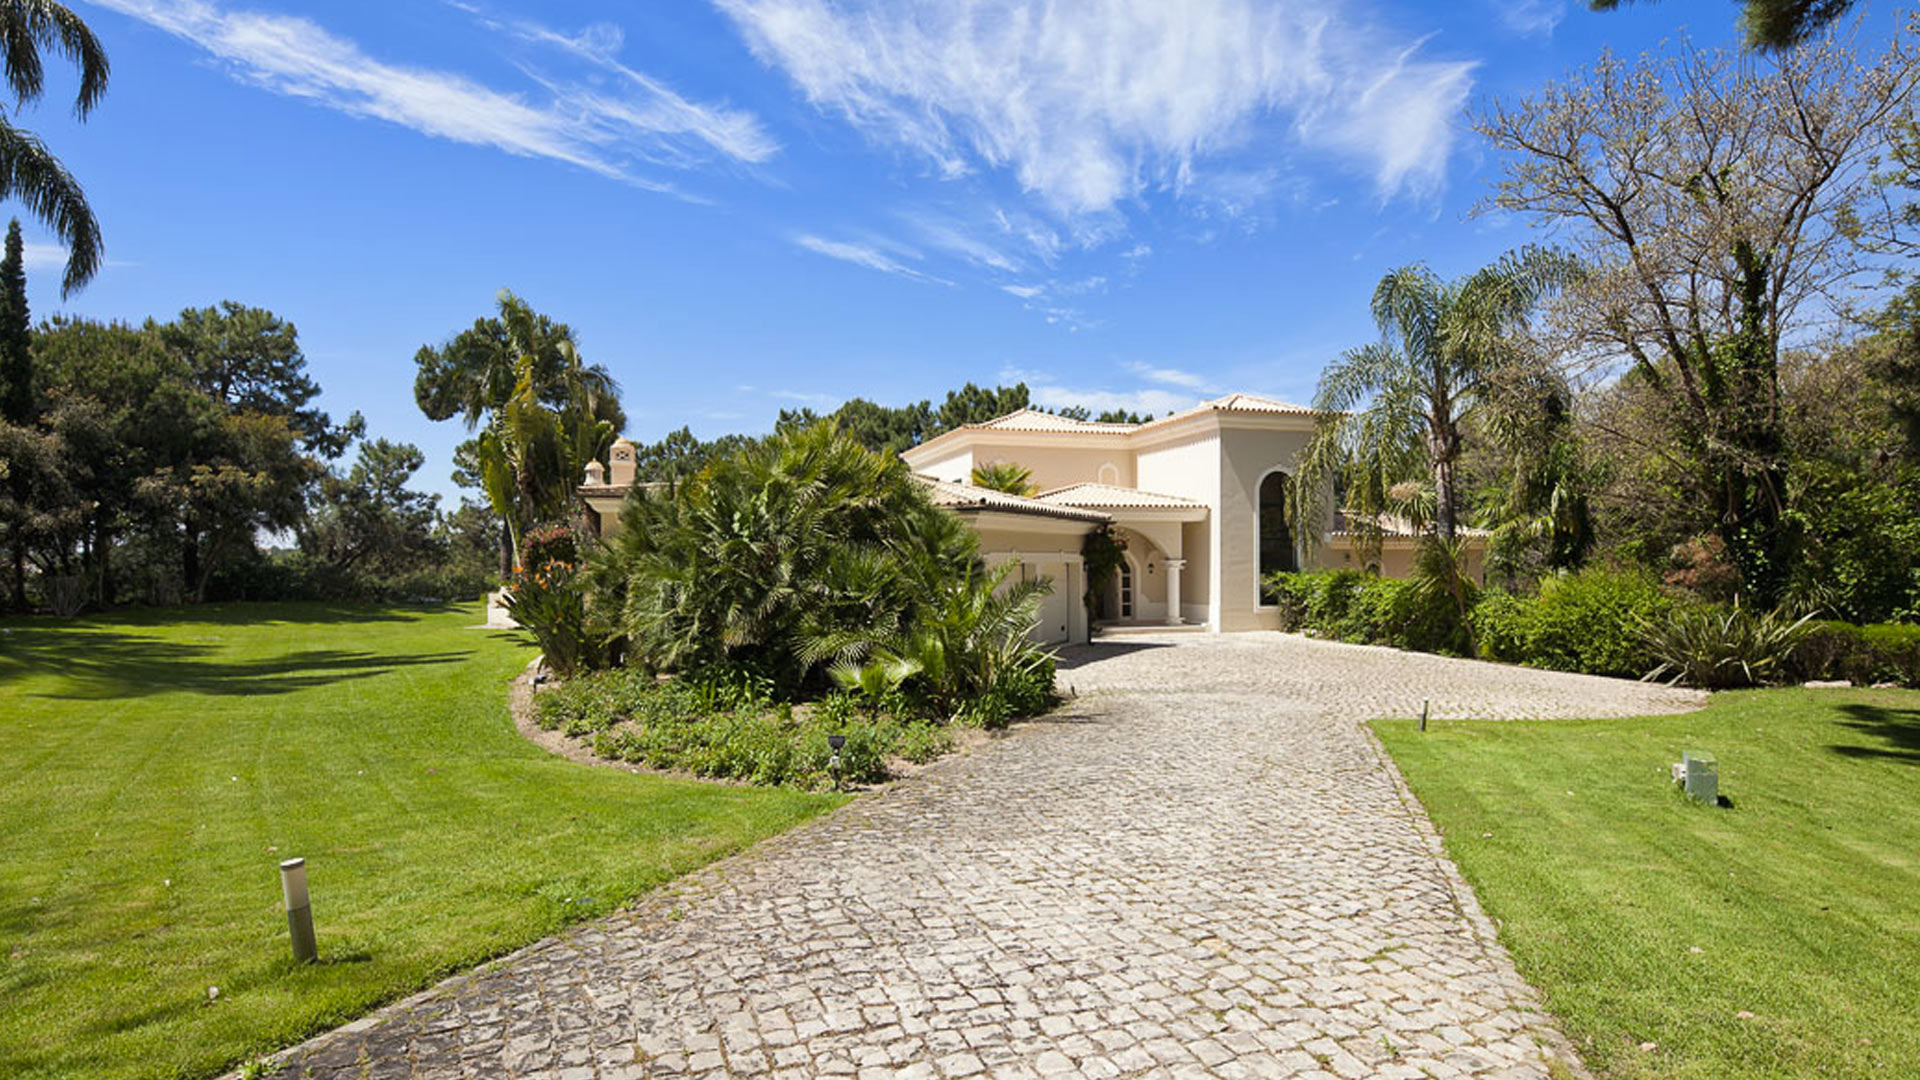 Villa Villa Lilies, Location à Algarve